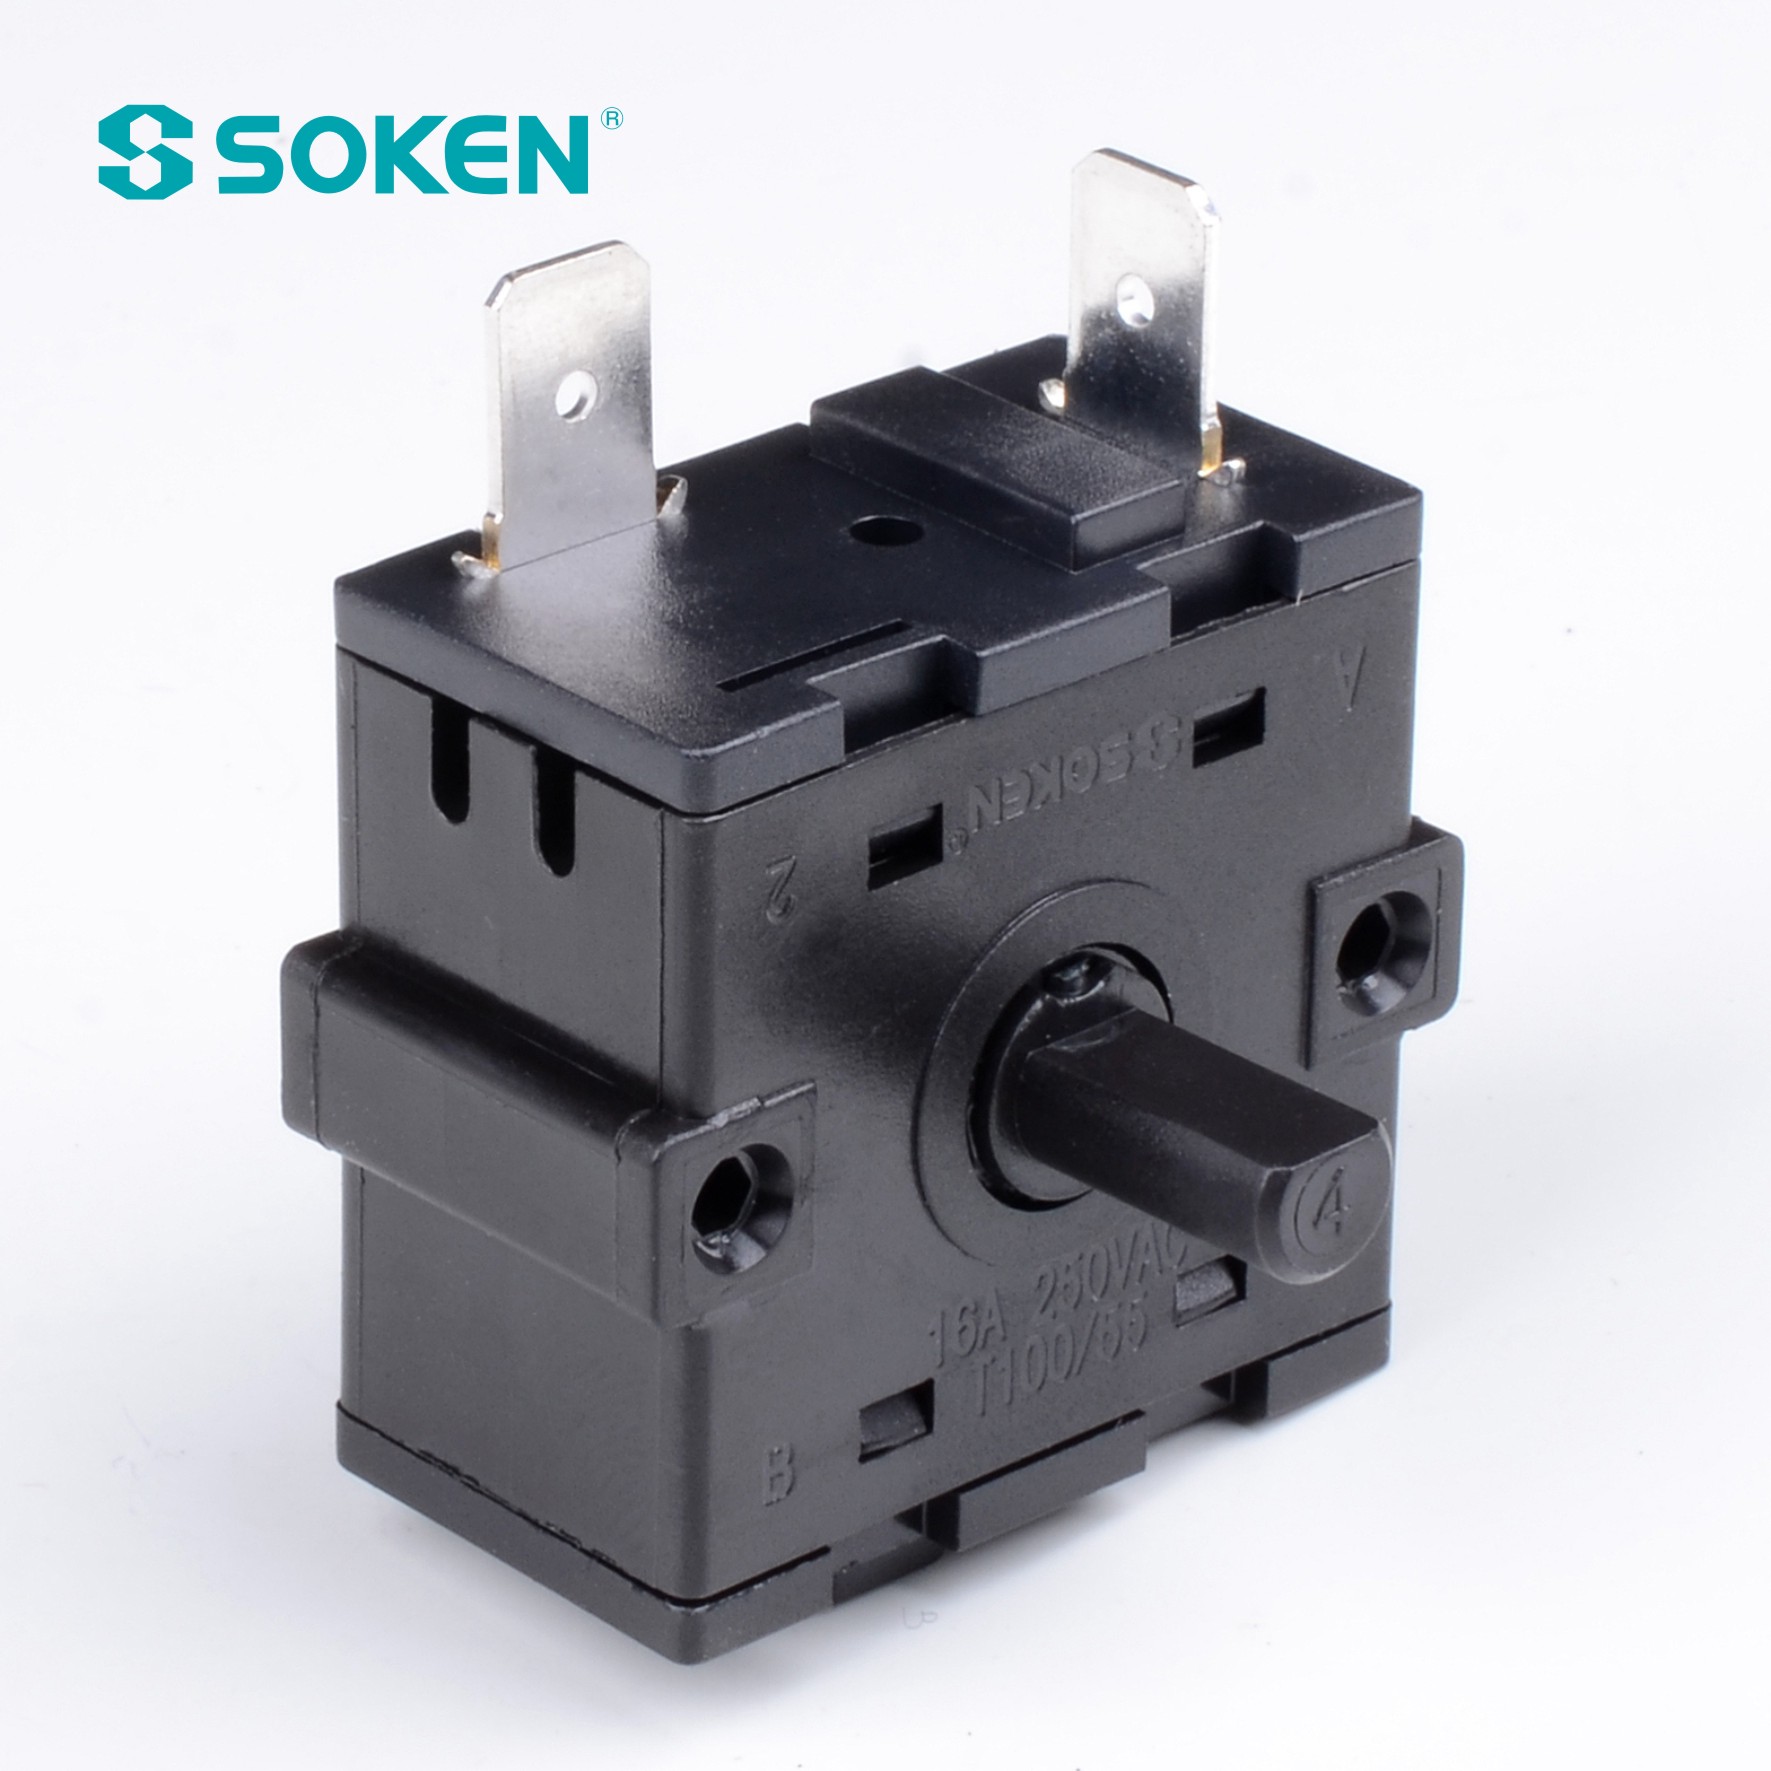 Soken 4 Position Rotary Switch for Oighinn Rt232-1